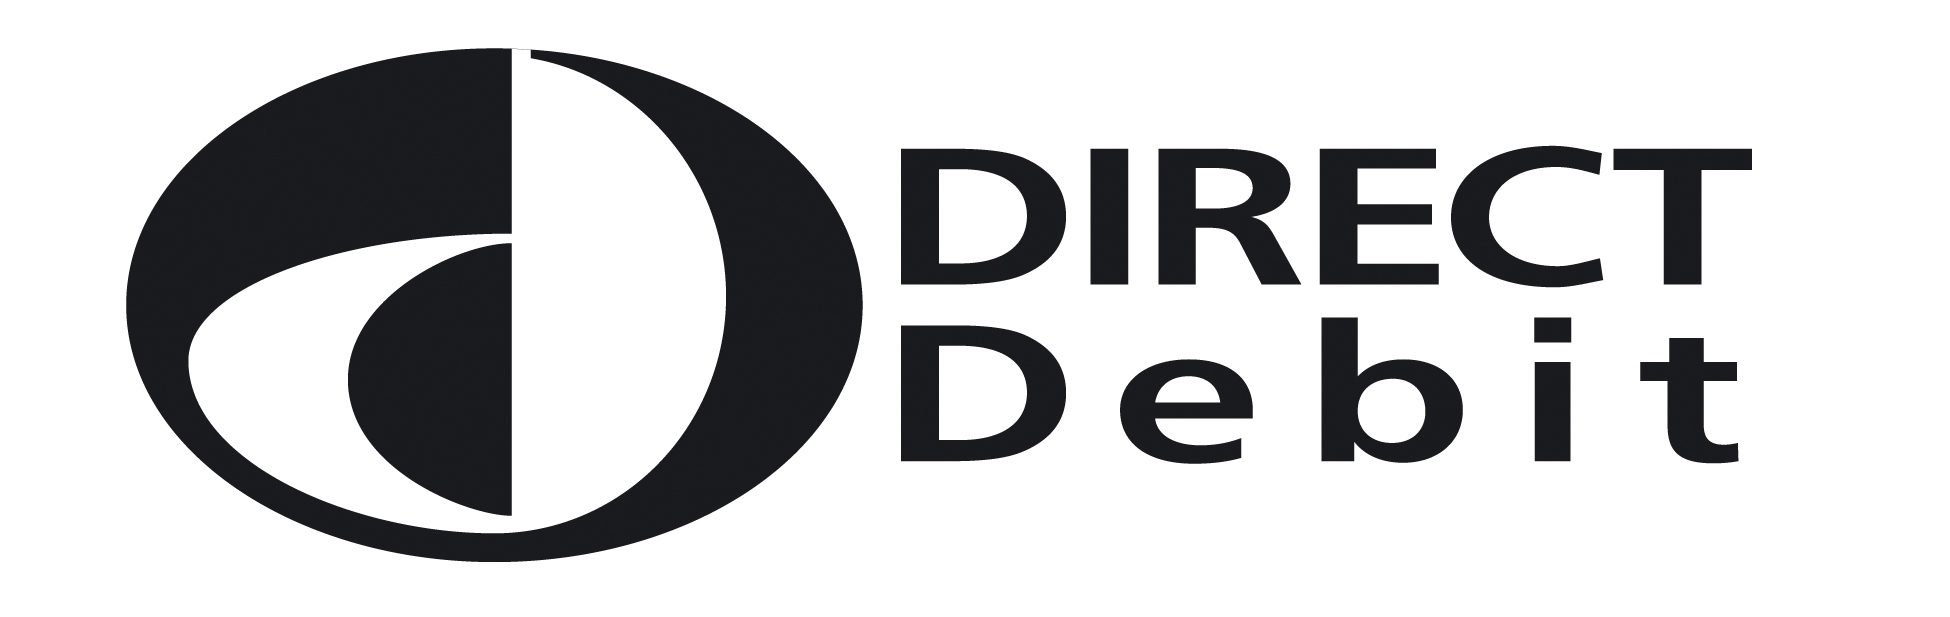 Image: Direct Debit logo